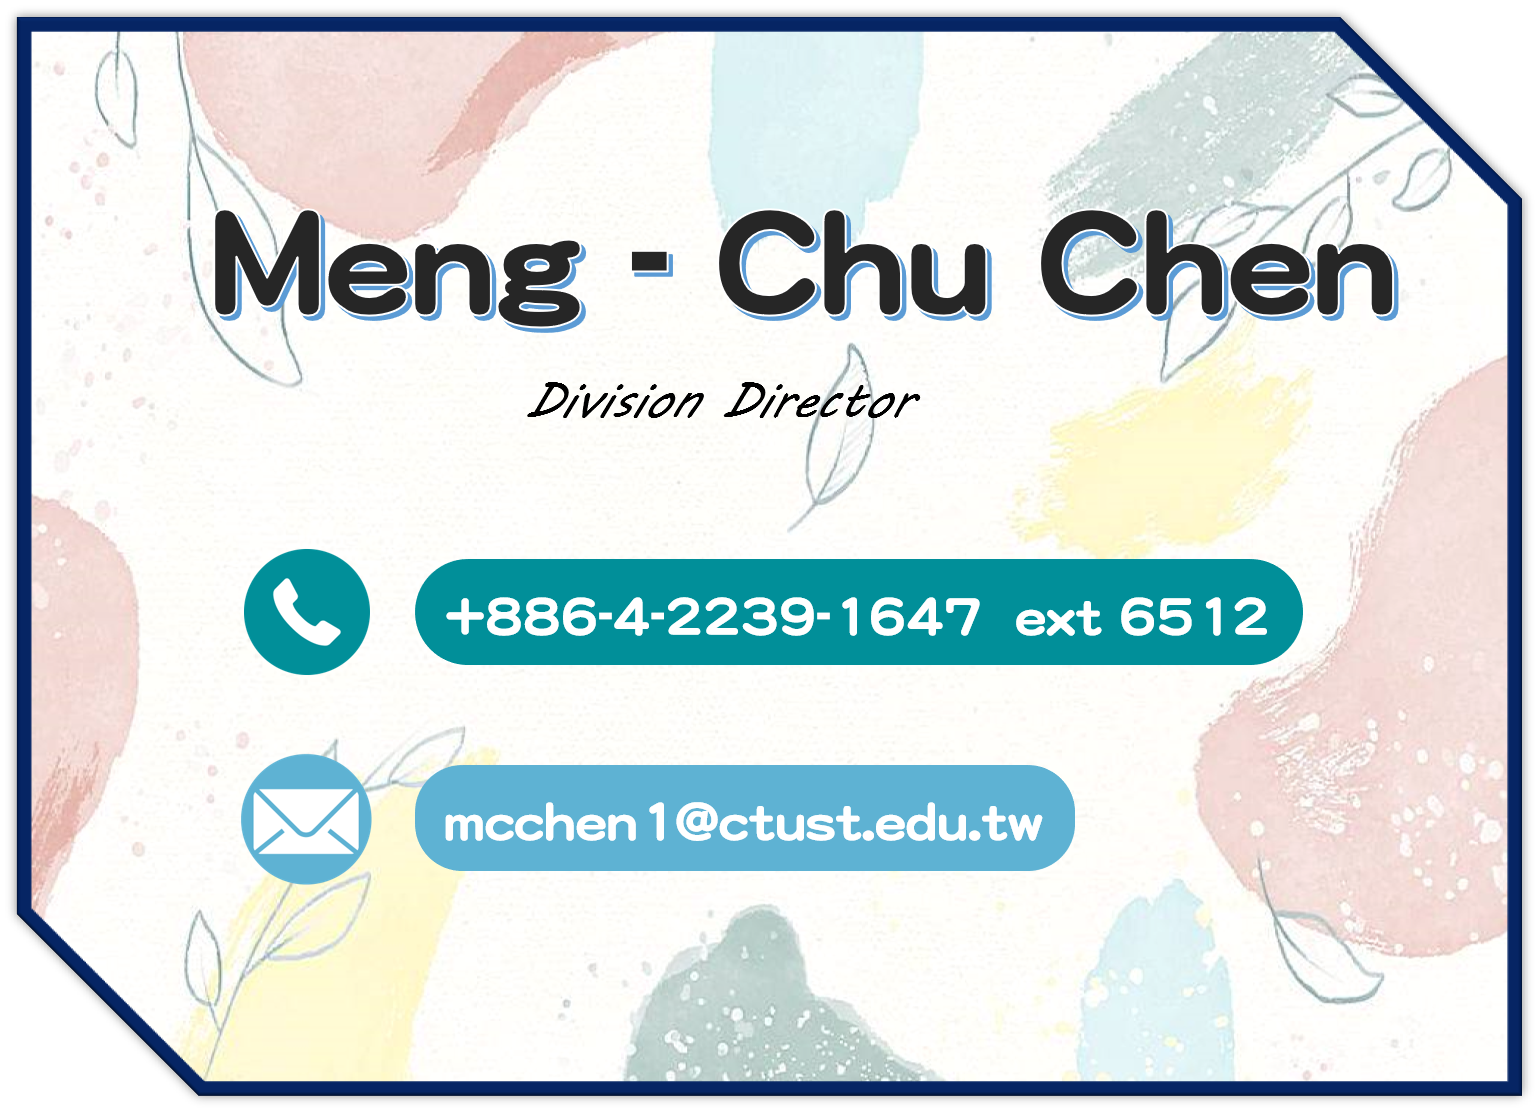 Meng - Chu Chen